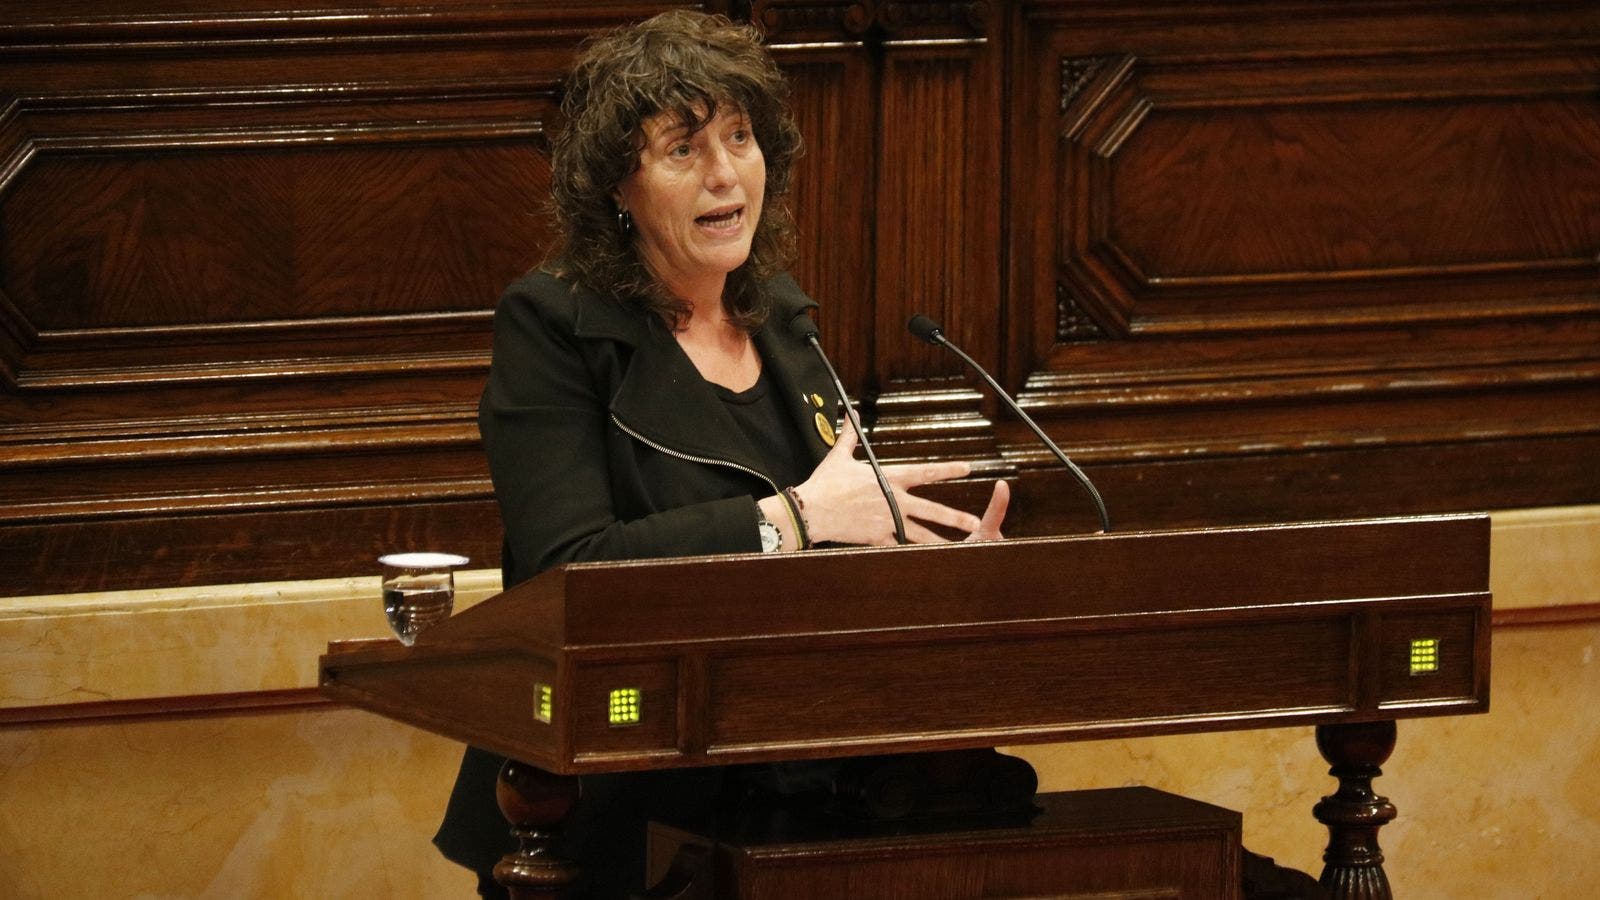 Teresa Jordà, diputada de ERC